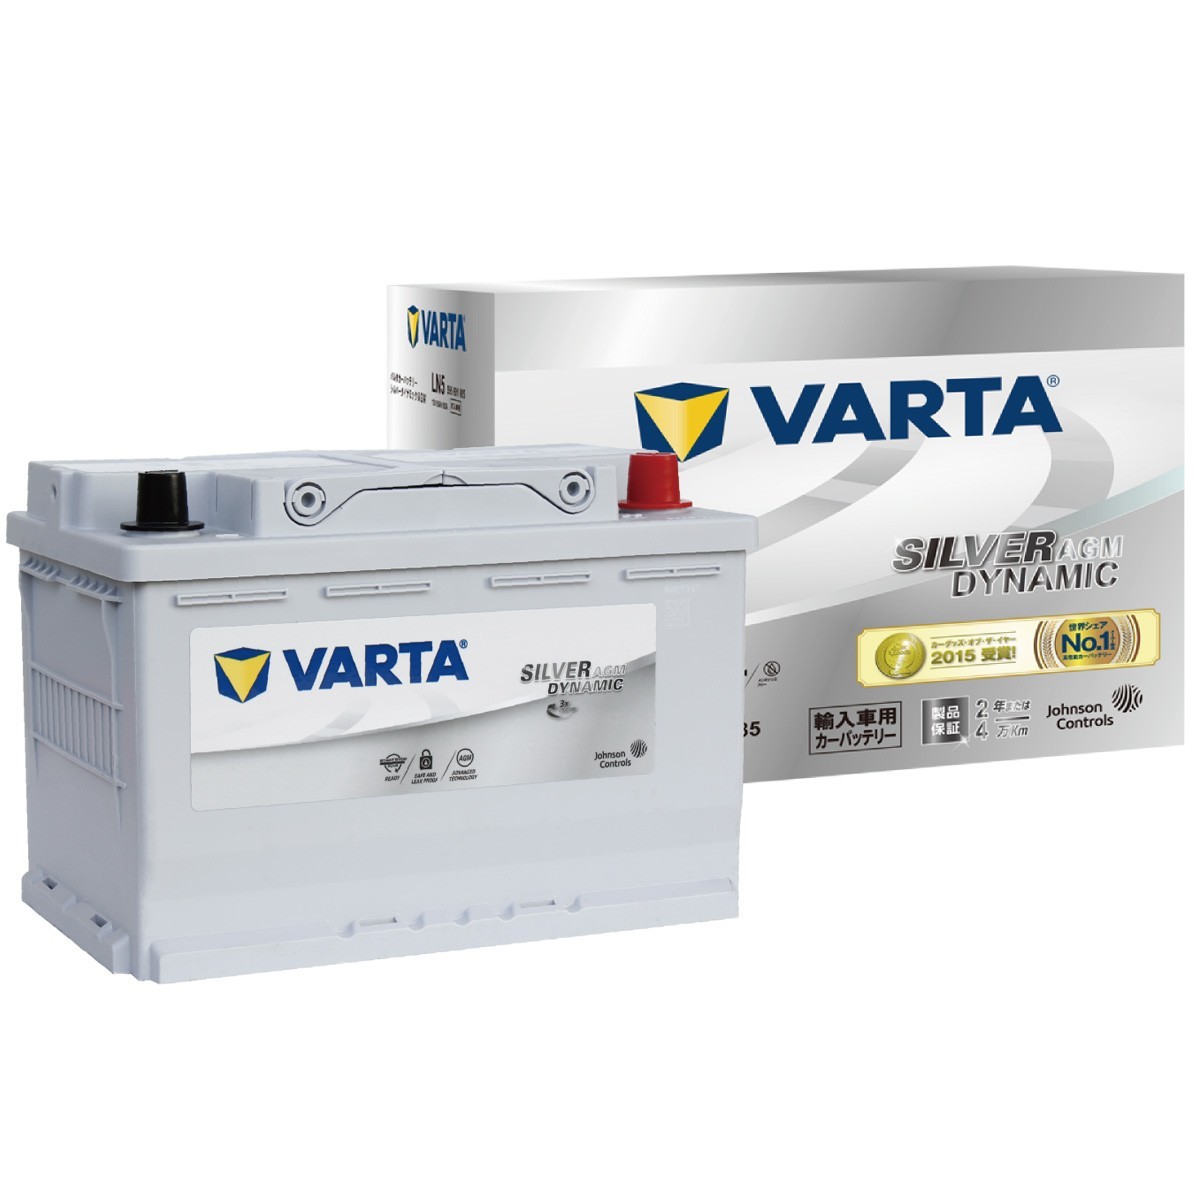 VARTA 580-901-080LN4(AGM/F21）バルタ 80Ah SILVER AGM DYNAMIC_画像1